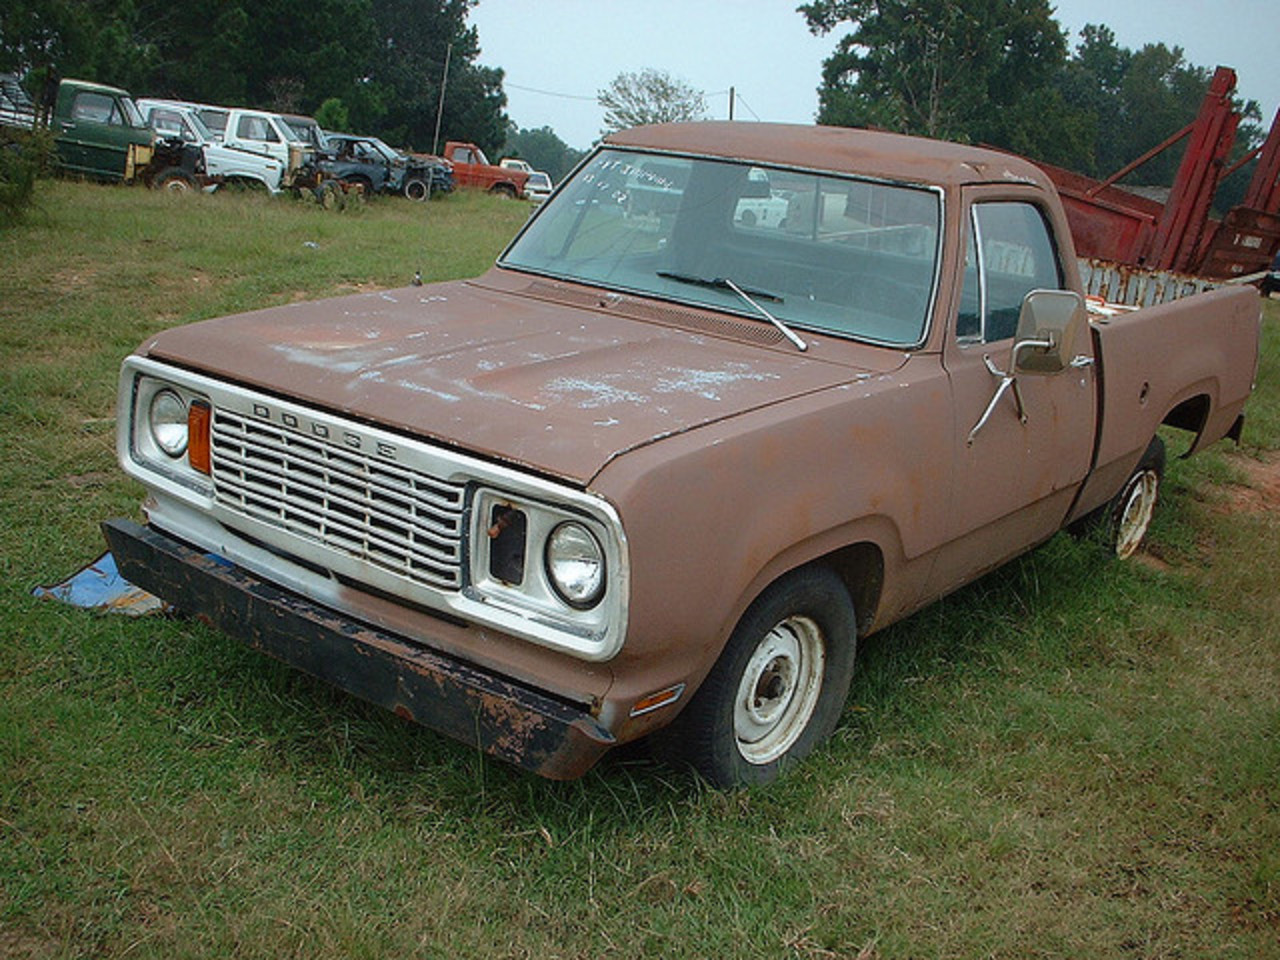 1977 Dodge D-100 Adventurer | Flickr - Photo Sharing!